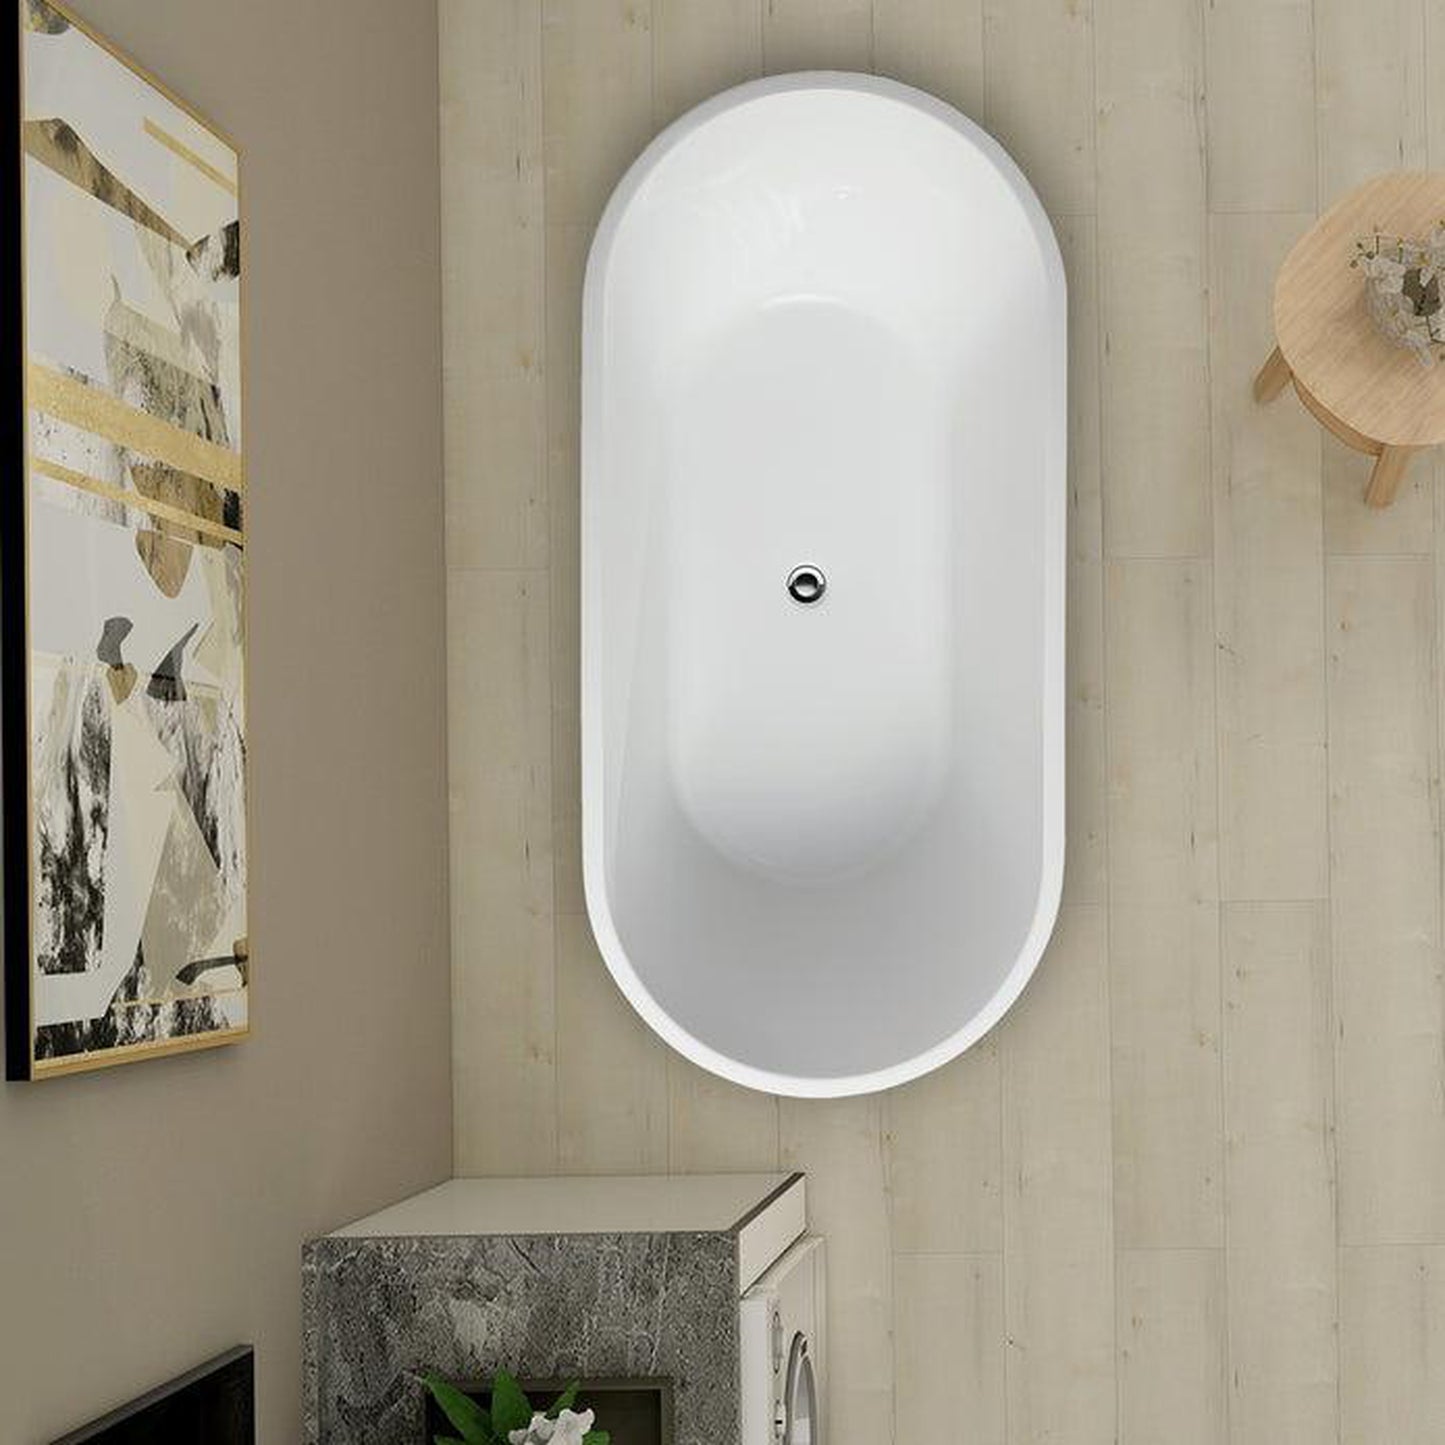 Vanity Art 63" x 30" White Acrylic Freestanding Bathtub With Chrome Pop-up Drain, Overflow and Flexible Drain Hose